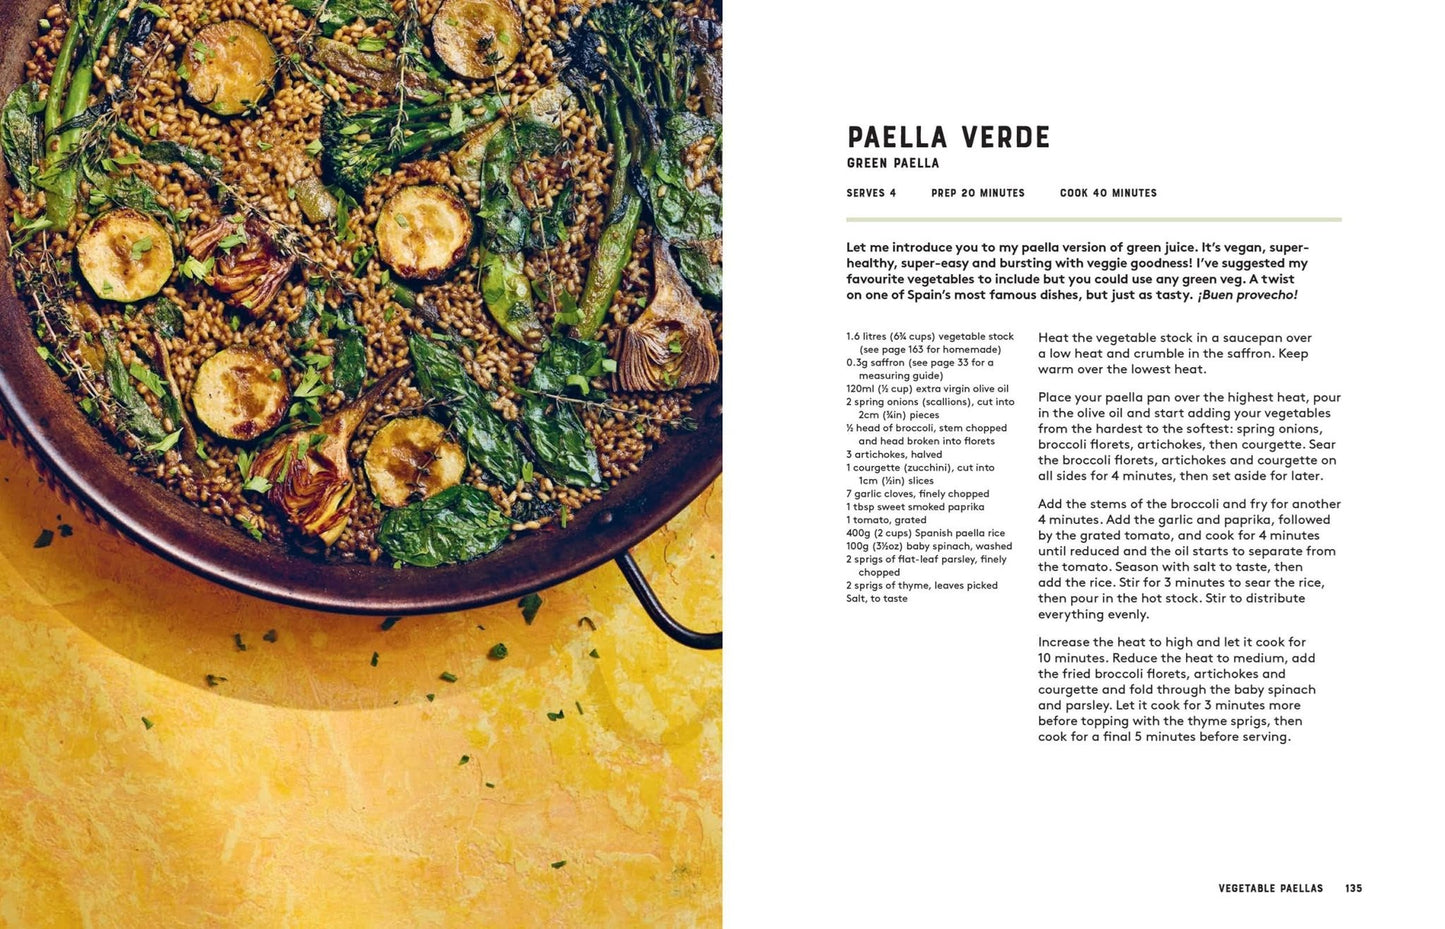 Heliotique | 'Paella: The Original One Pan Dish' Recipe Book